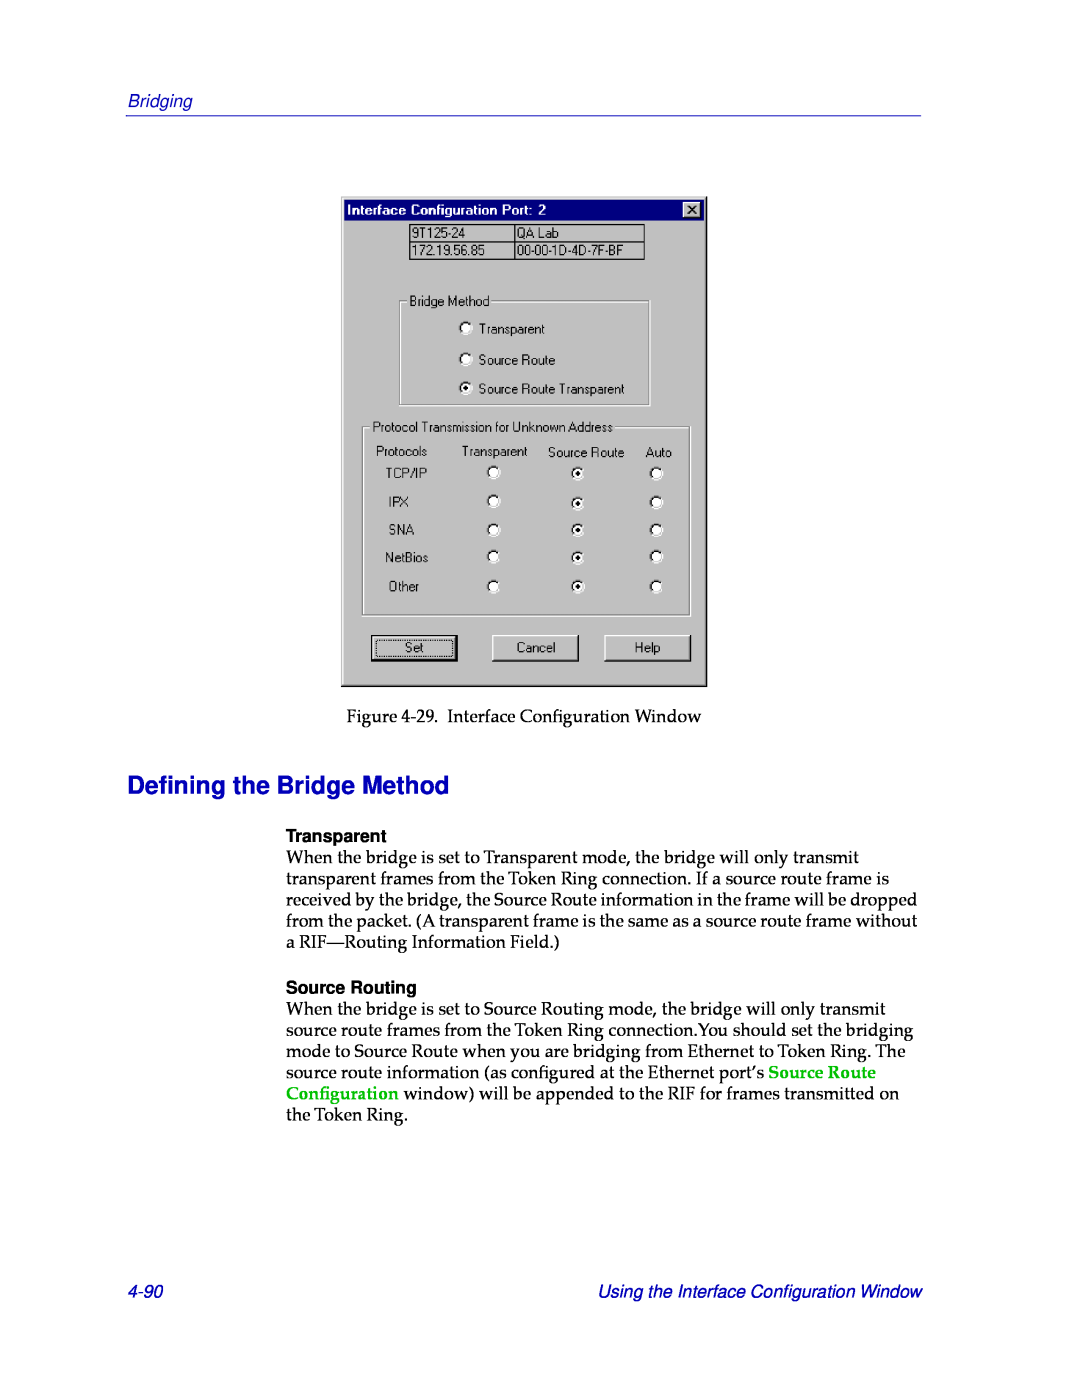 Cabletron Systems CSX400, CSX200 manual Deﬁning the Bridge Method, 4-90, Bridging, Transparent, Source Routing 